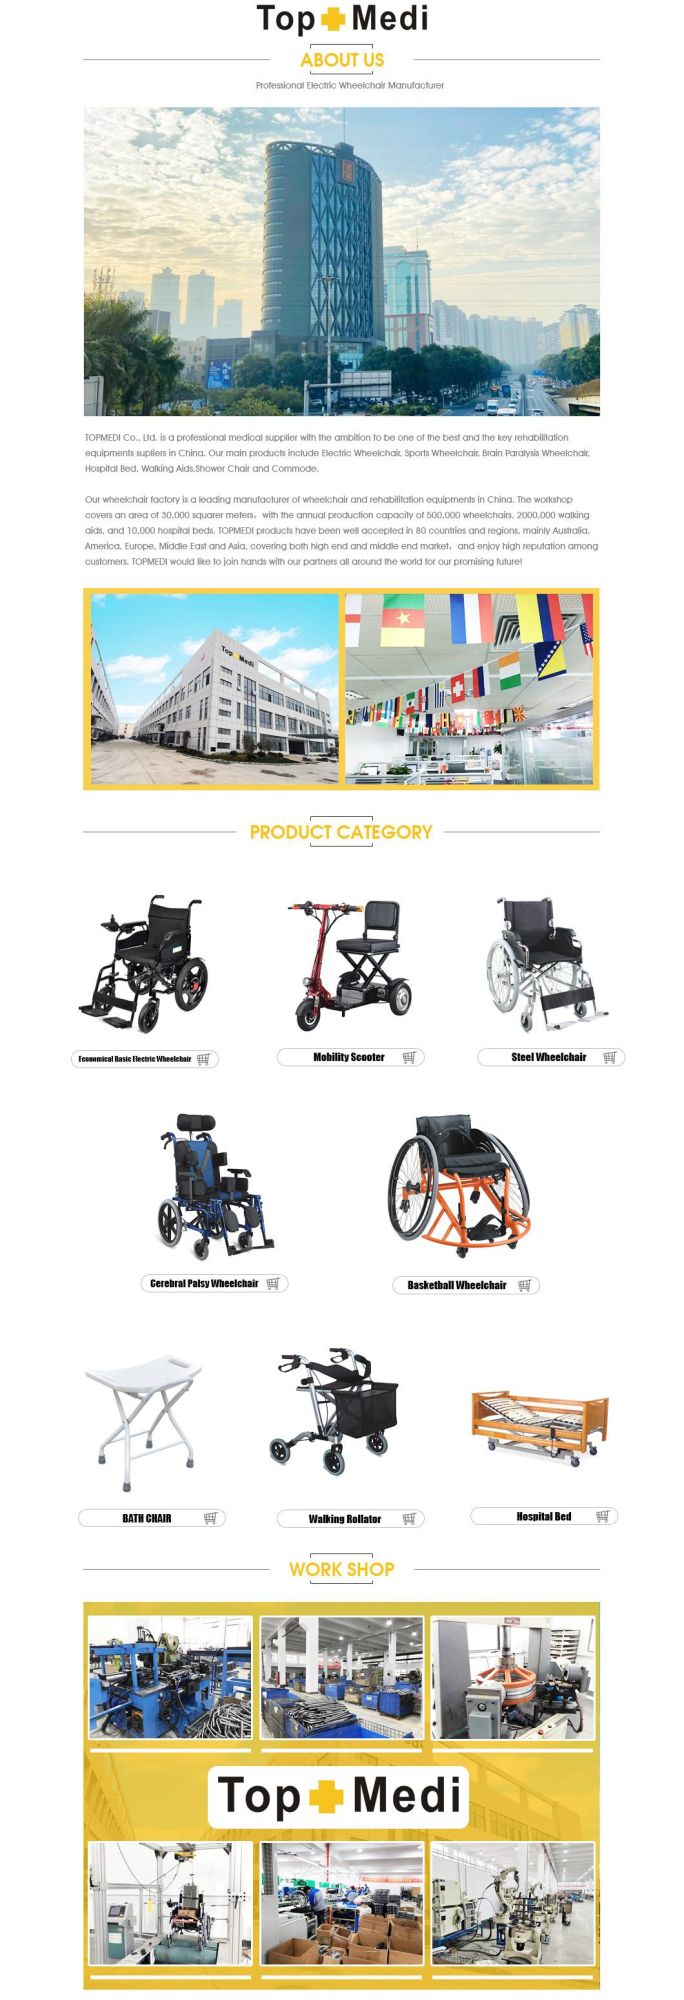 Medical Equipment Supplies, Sport Wheel Chair, Badminton Wheelchair with Seat Angle Tilt